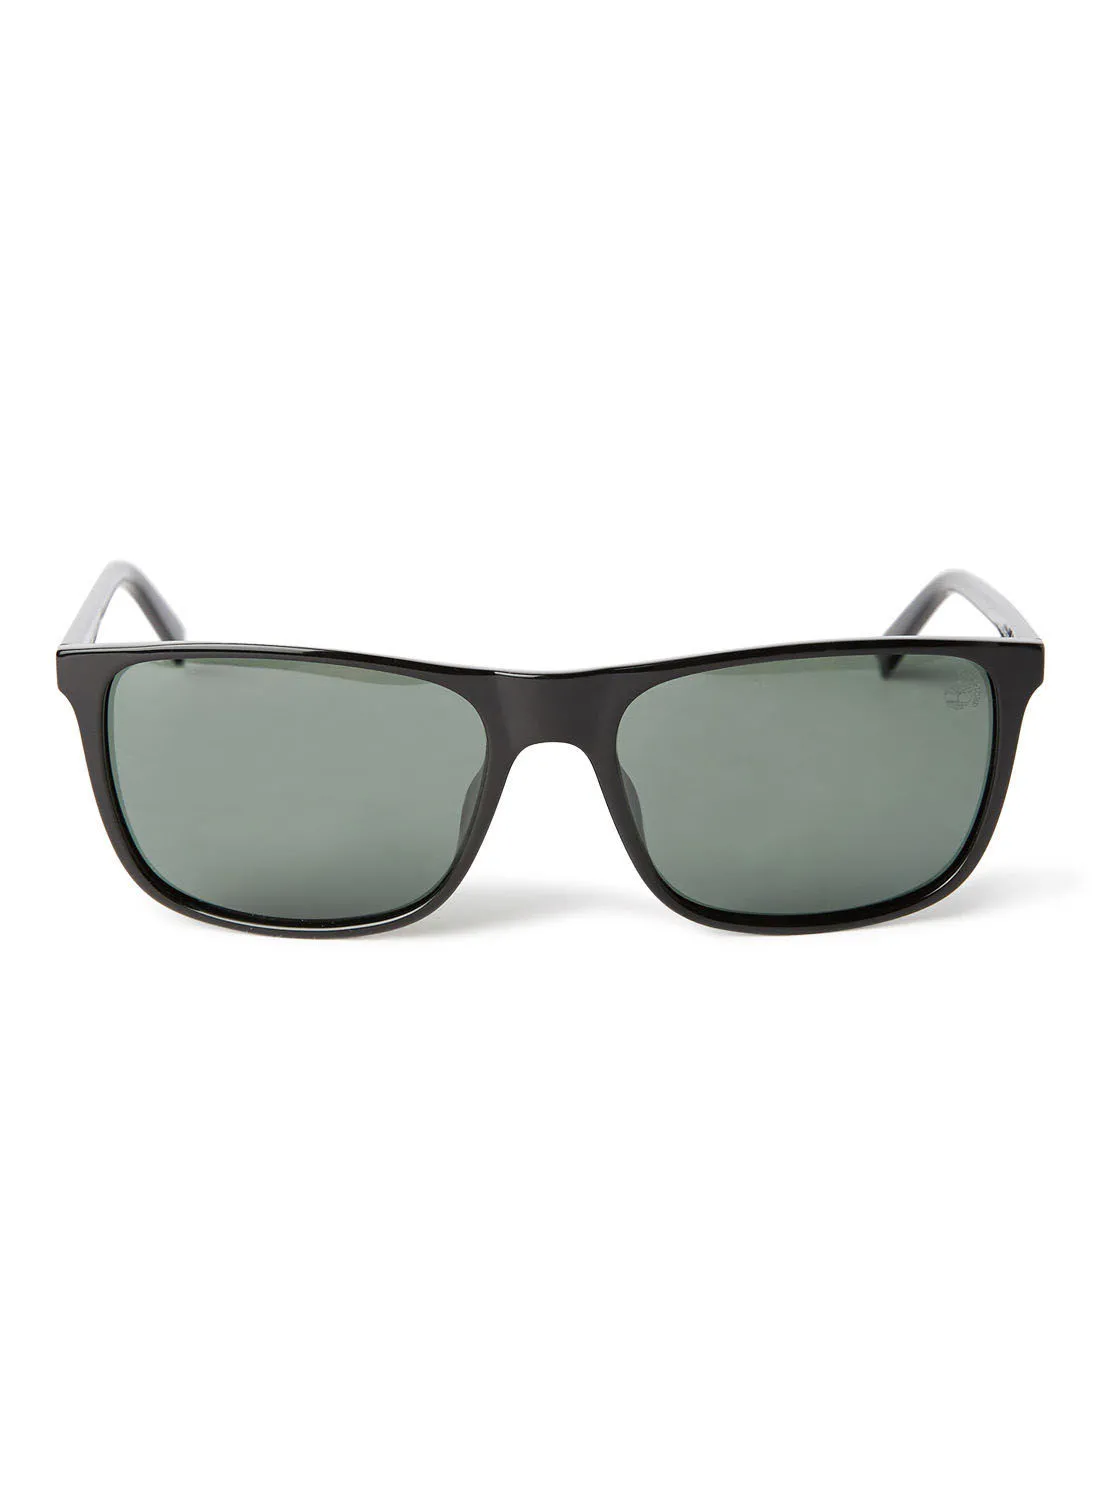 Timberland Men's UV Protective Sunglasses - Lens Size: 58 mm